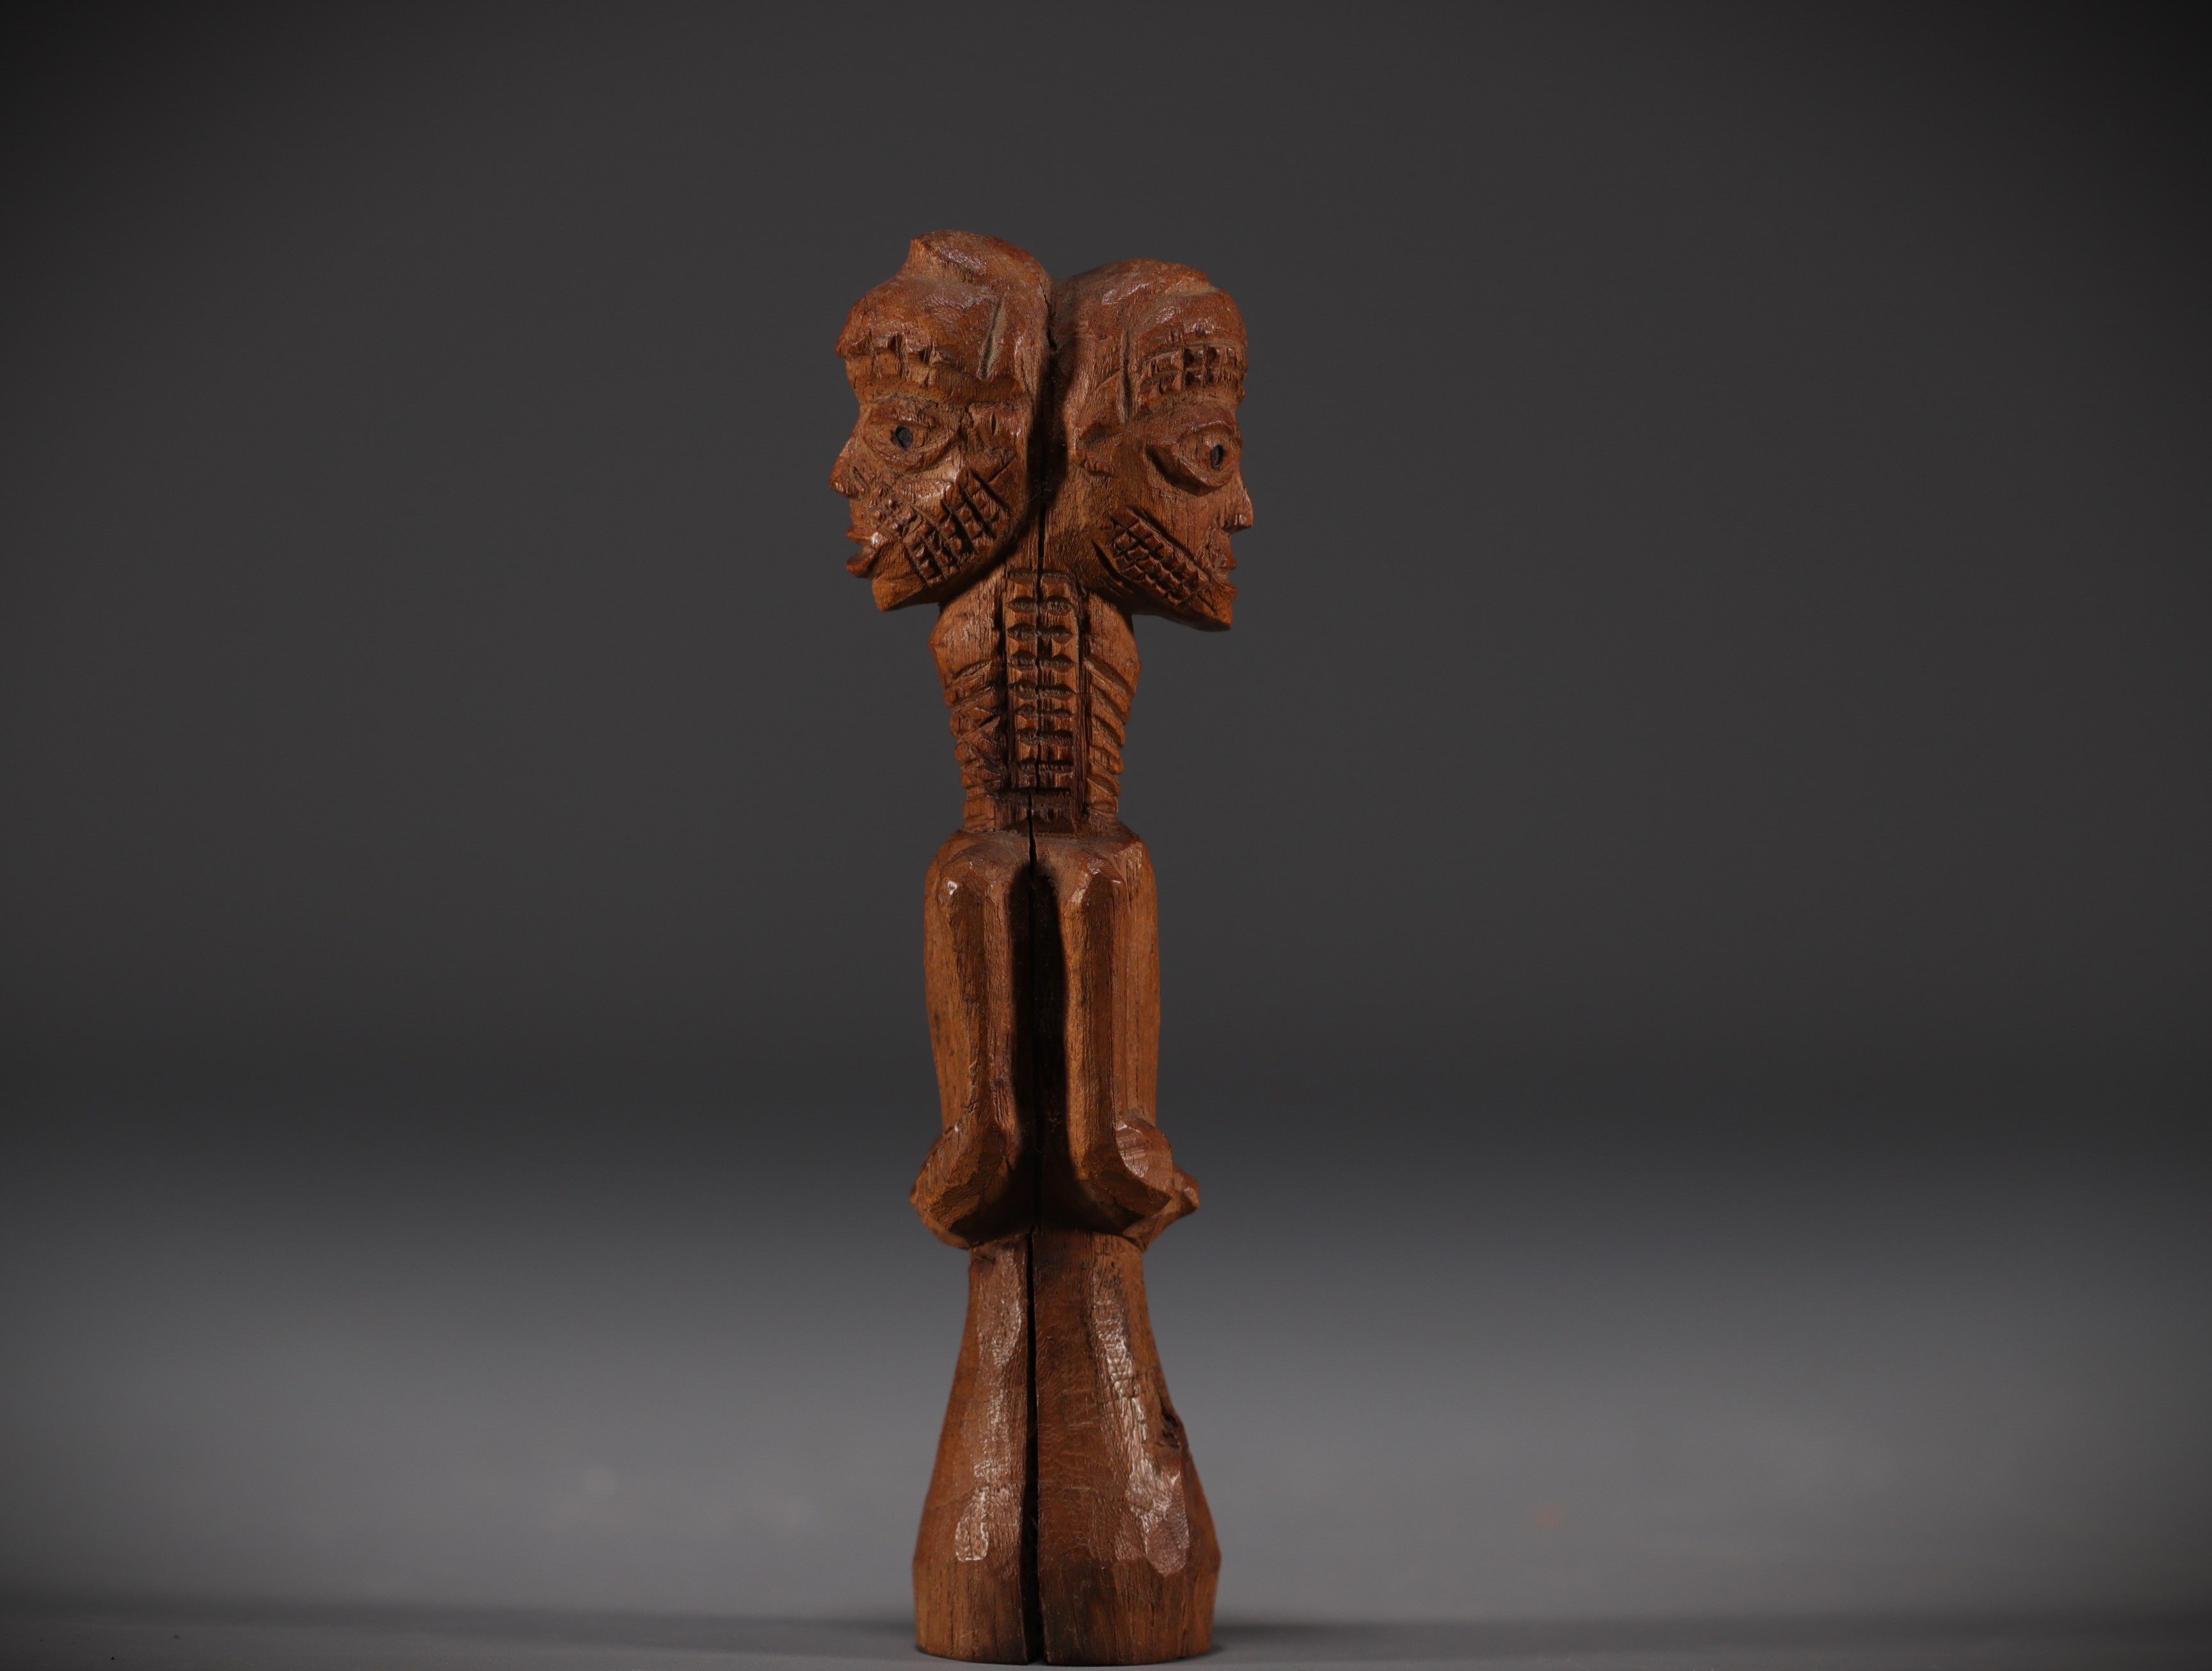 Lulua - Janus figure - Rep.Dem.Congo - Image 3 of 4